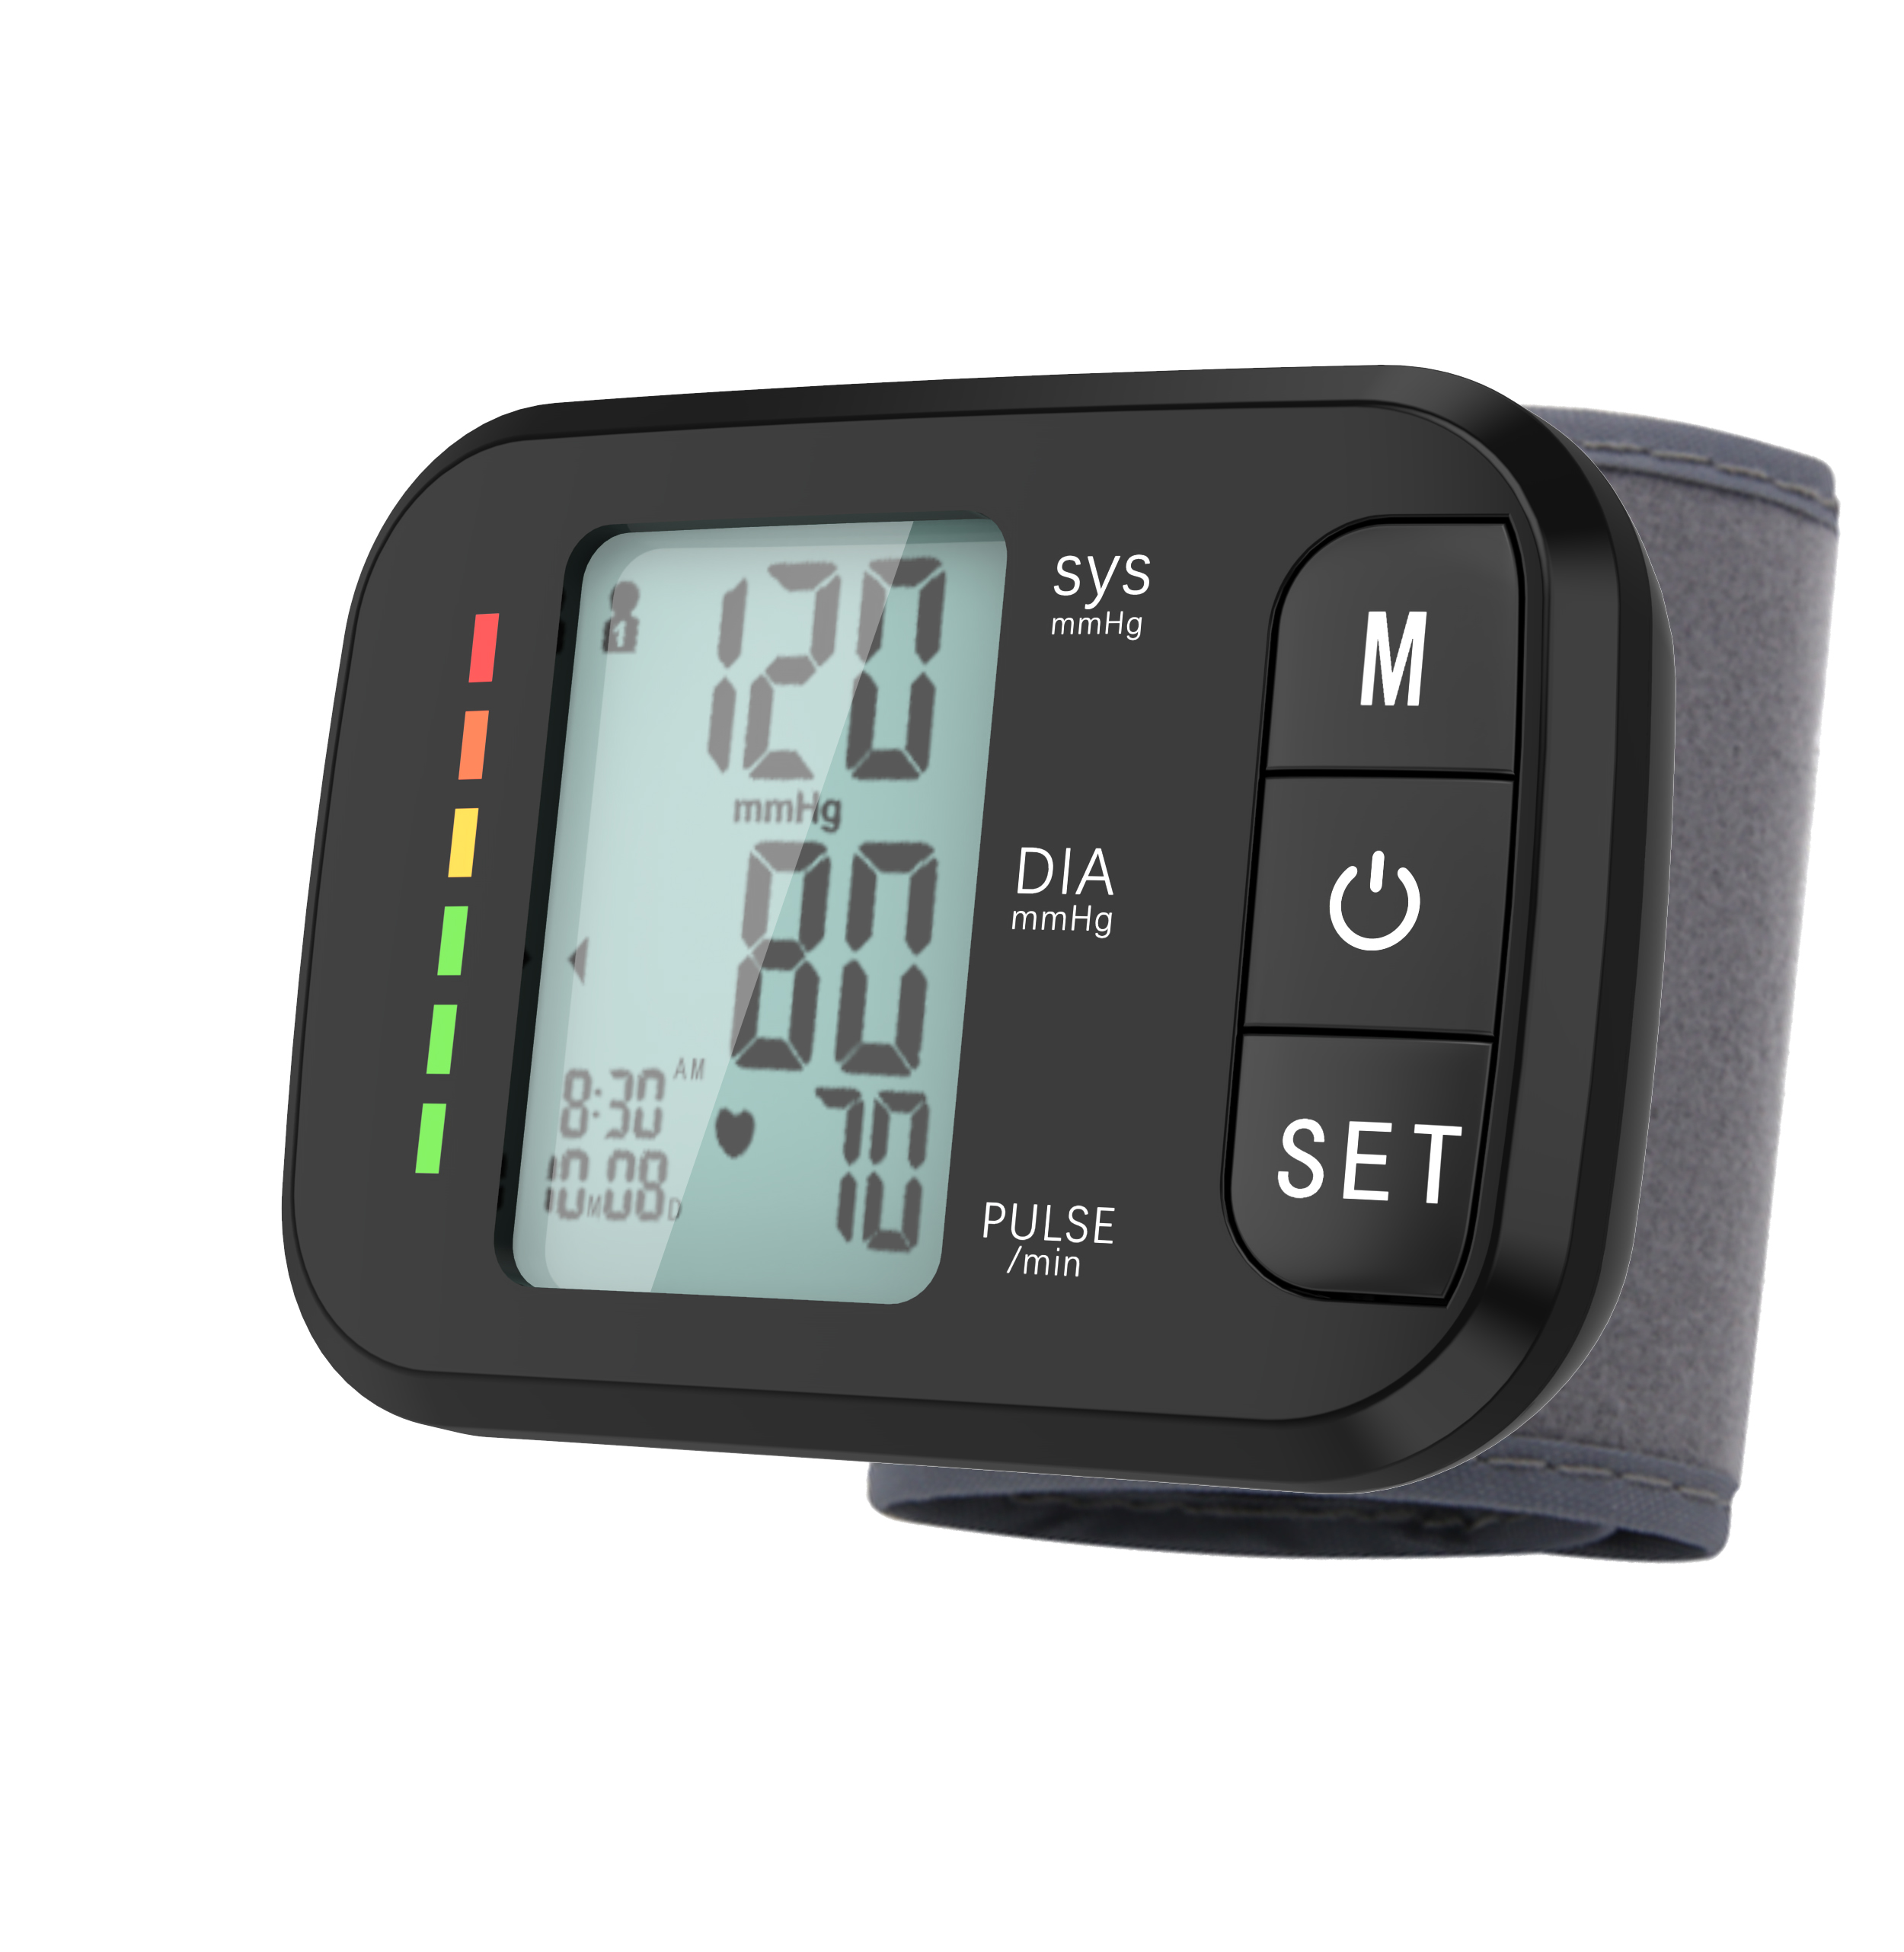 Ririmi Endla hi ku landza swilaveko swa Digital Sphygmomanometer Wrist Blood Pressure Monitor